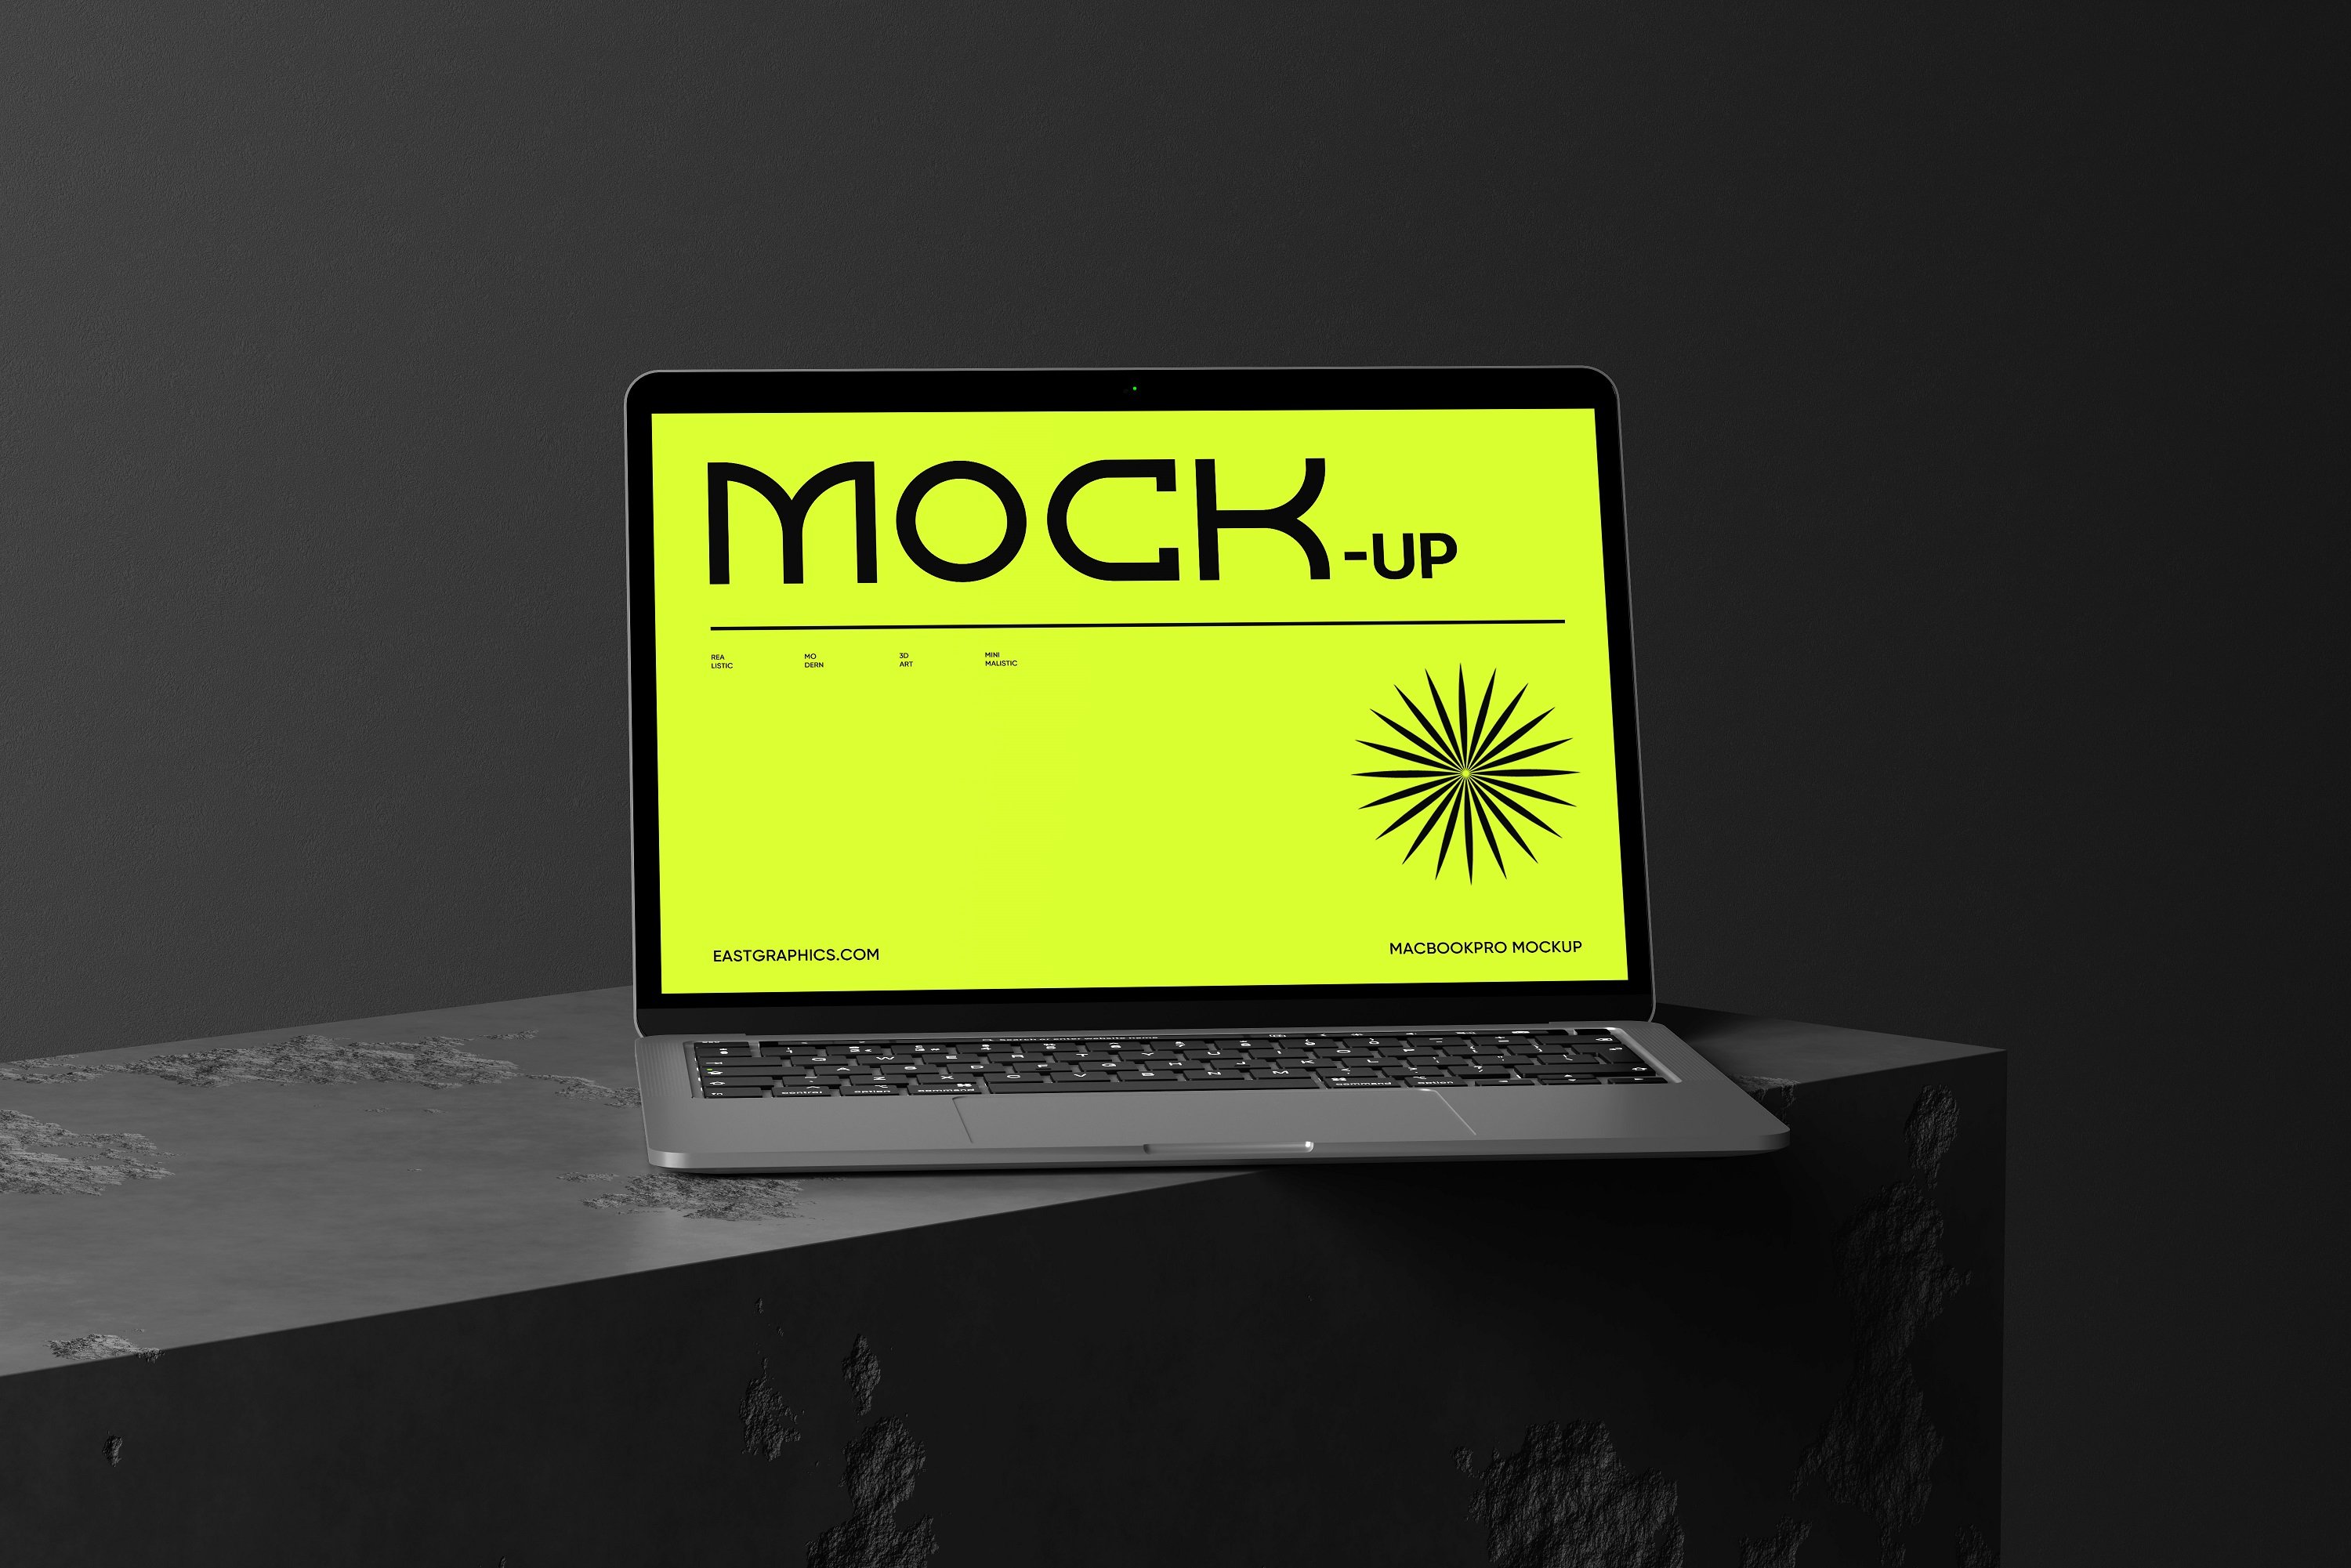 Macbook Pro Mockup cover image.